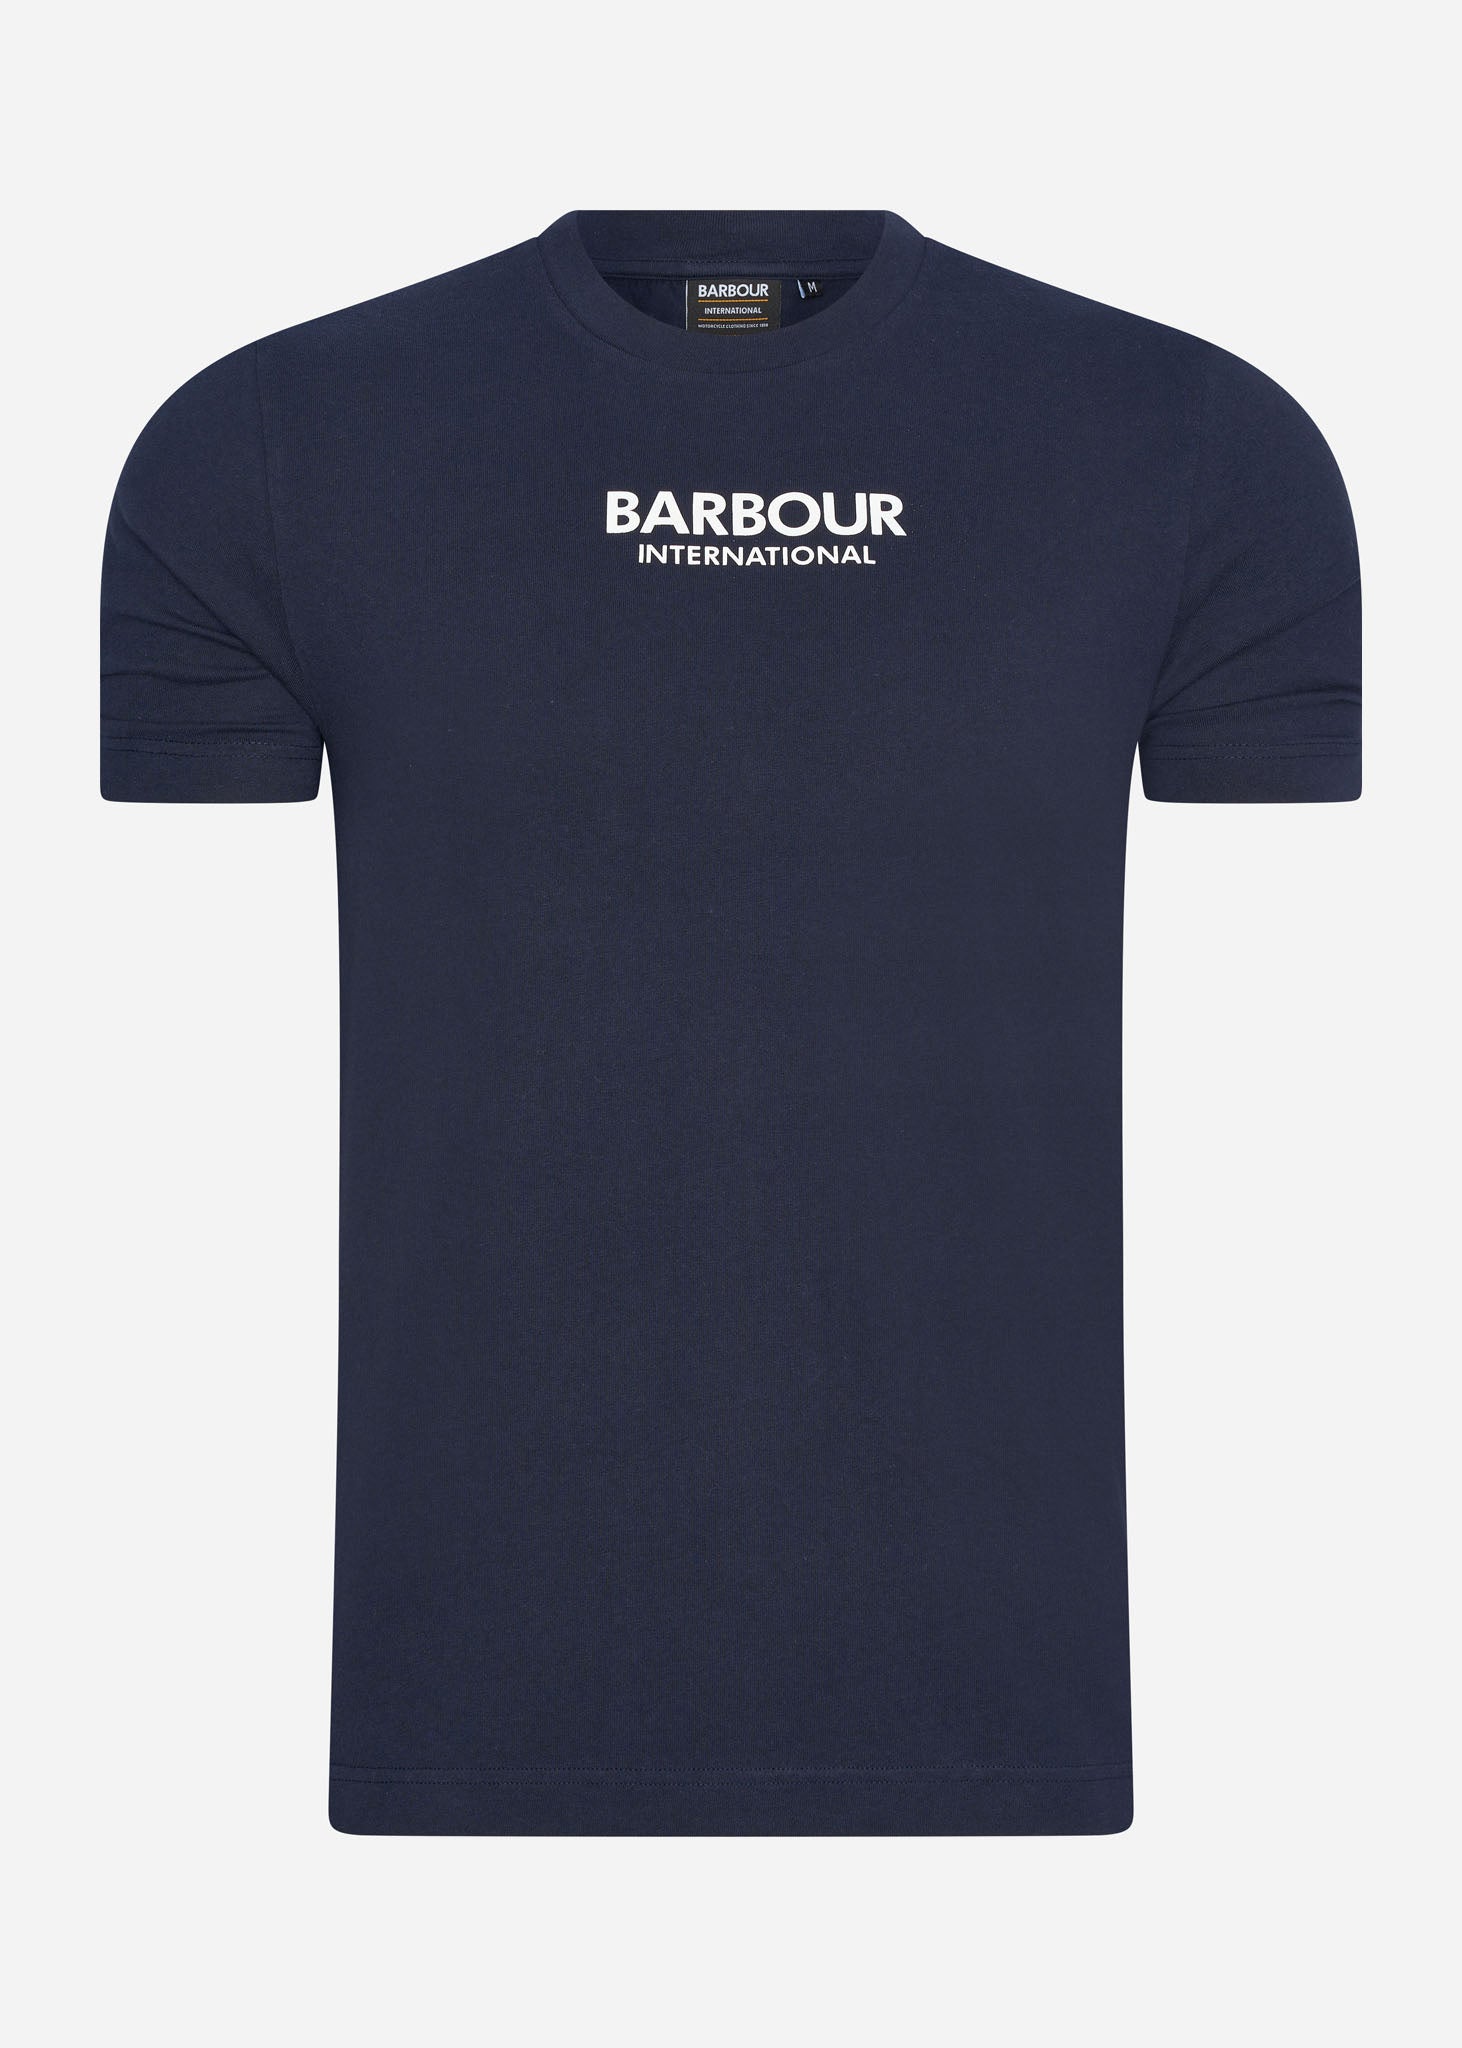 Barbour t-shirt navy